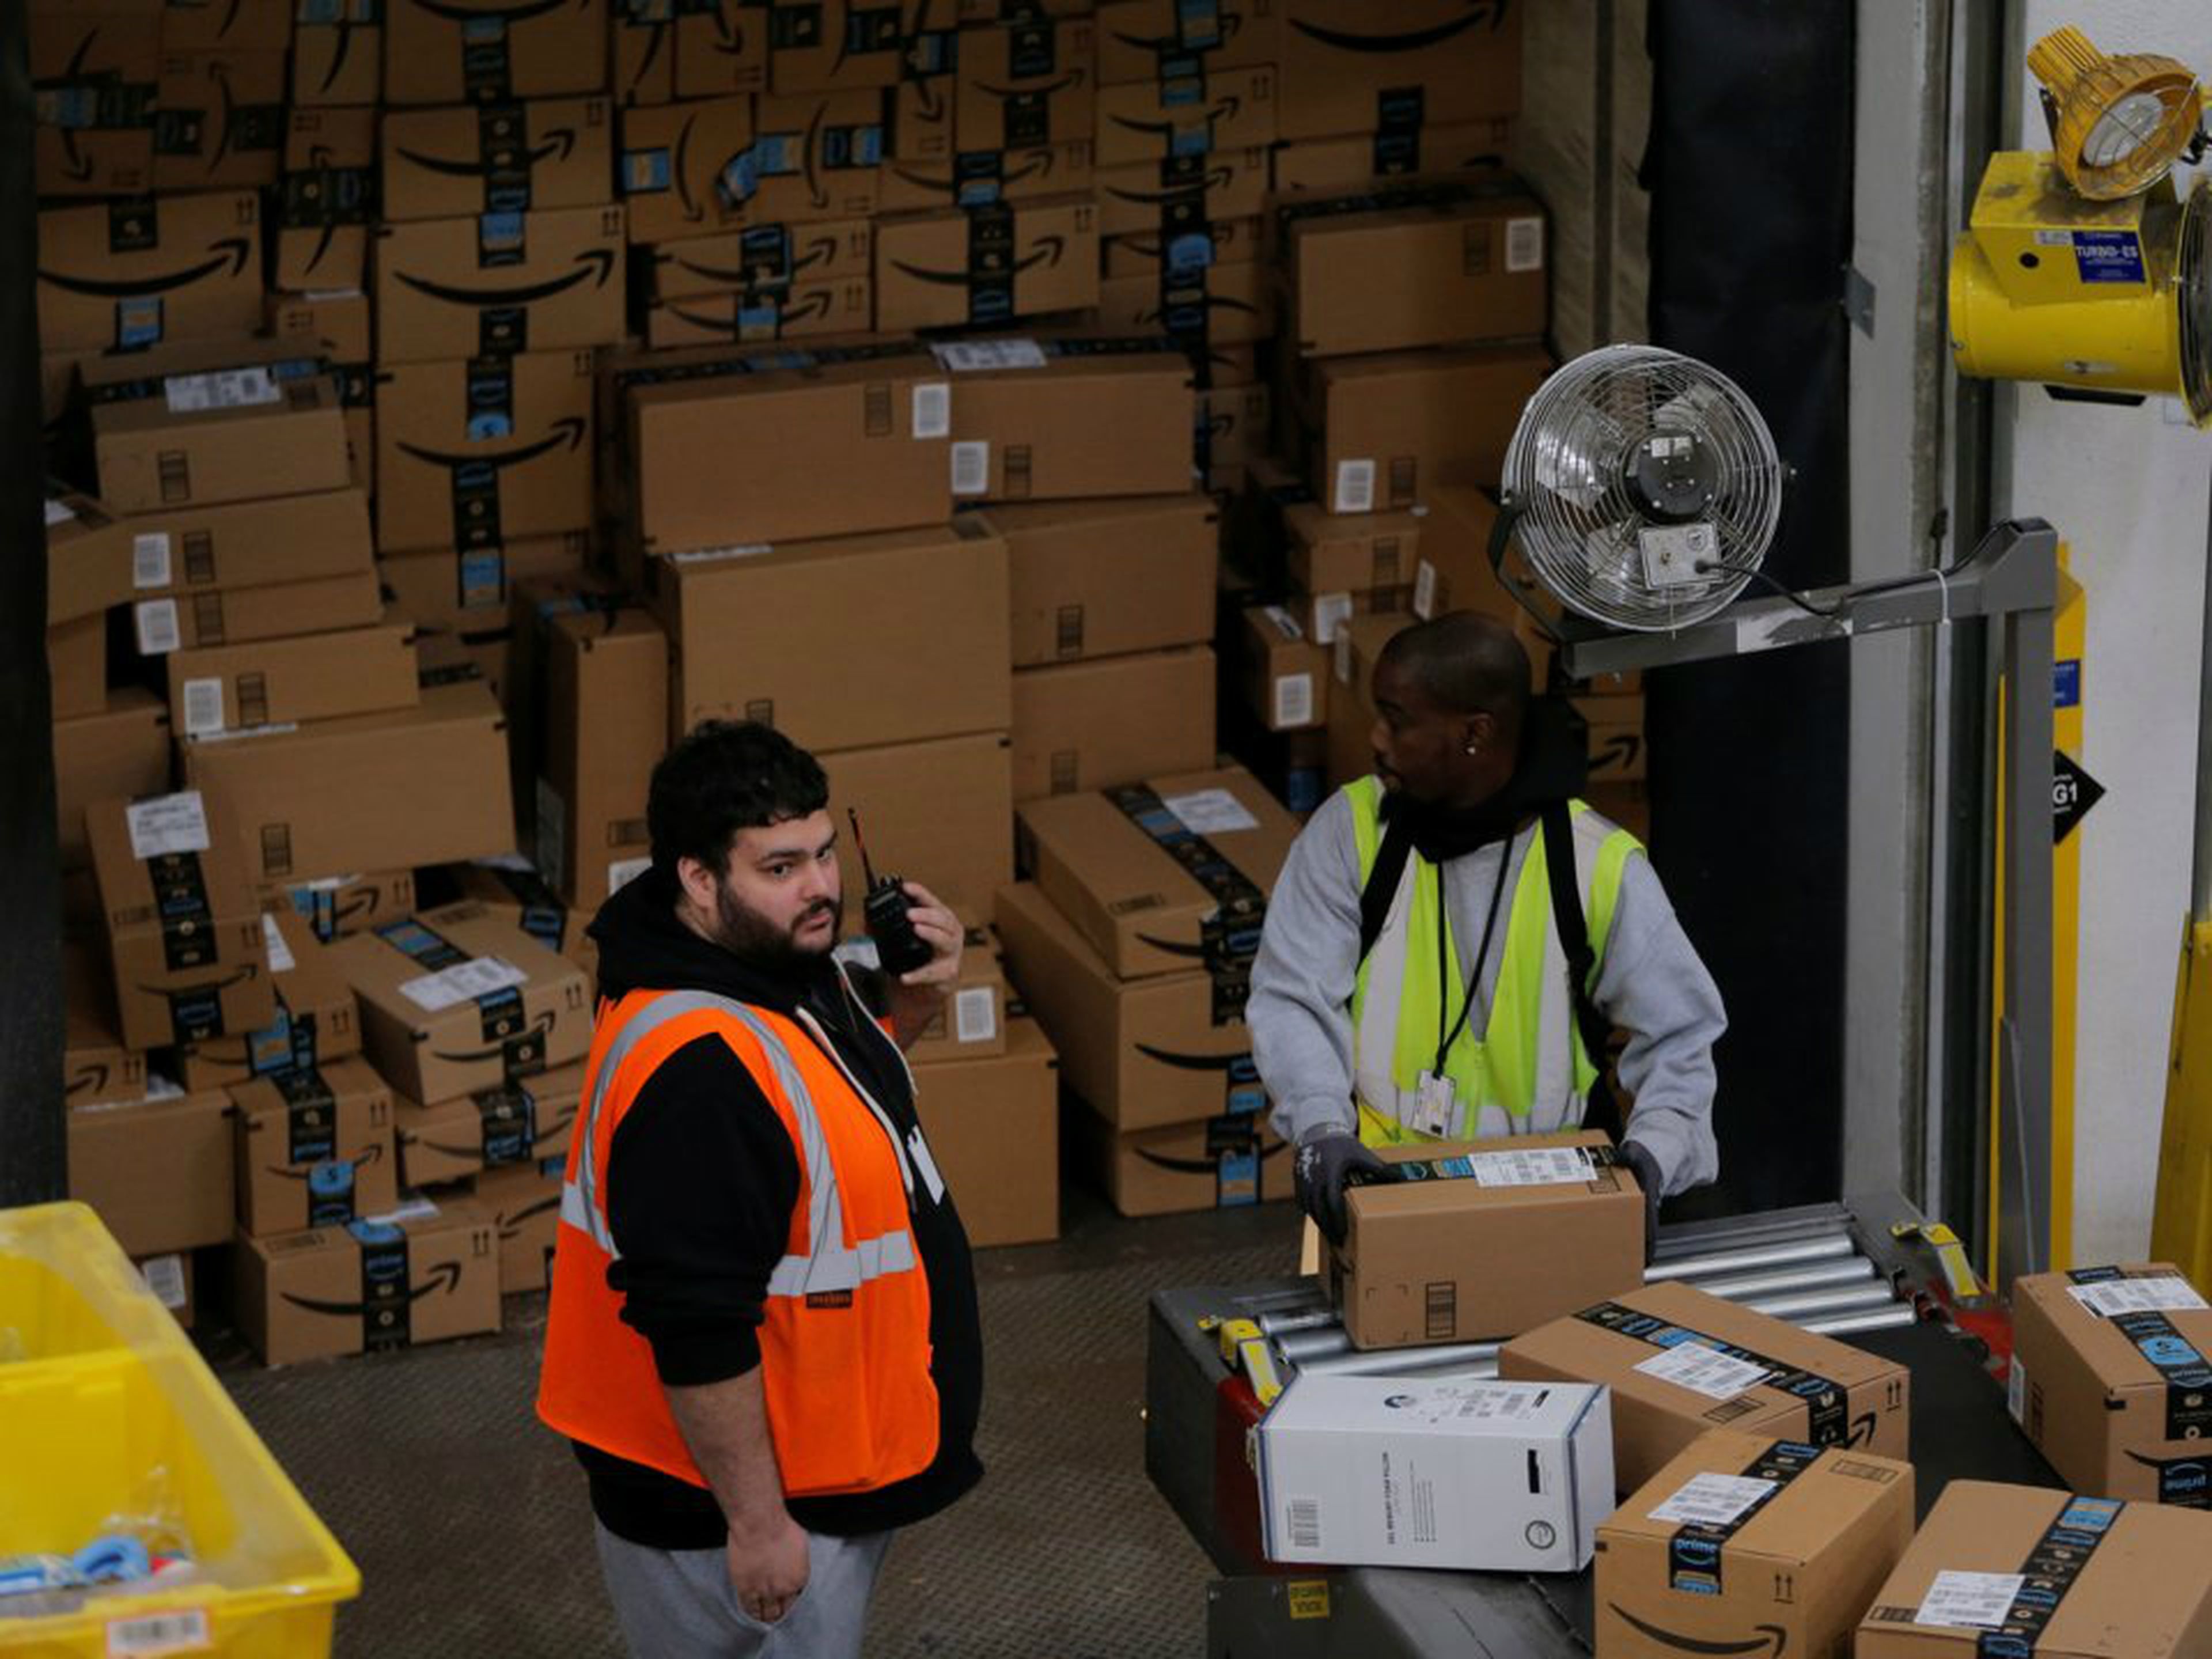 Dos operarios etiquetan y ordenan paquetes de Amazon.